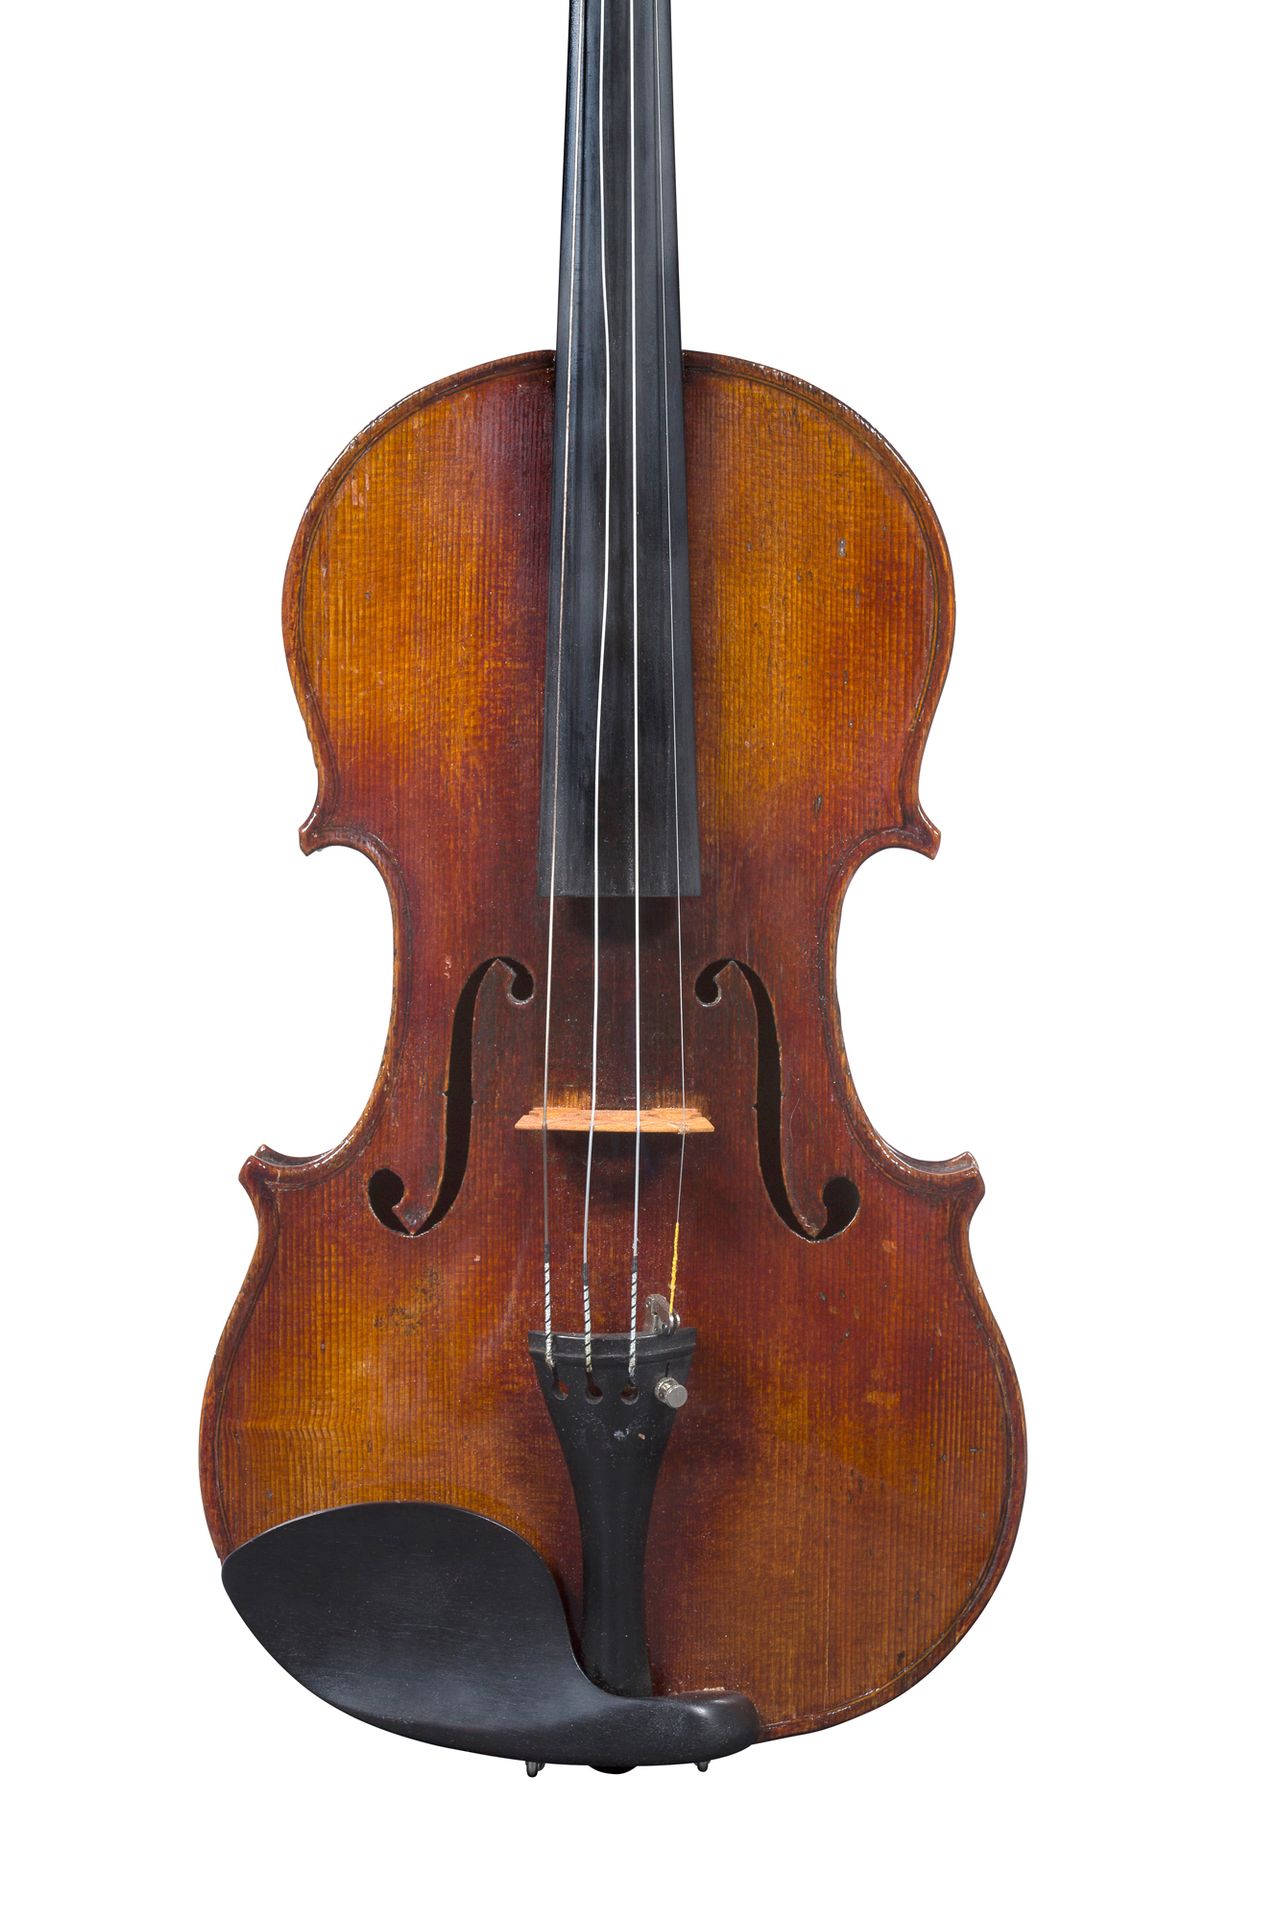 Null 1870-80年左右在米勒库尔制造的小提琴
标签：M Garnier à Lyon 1915
顶部有各种修复 
背面有359毫米